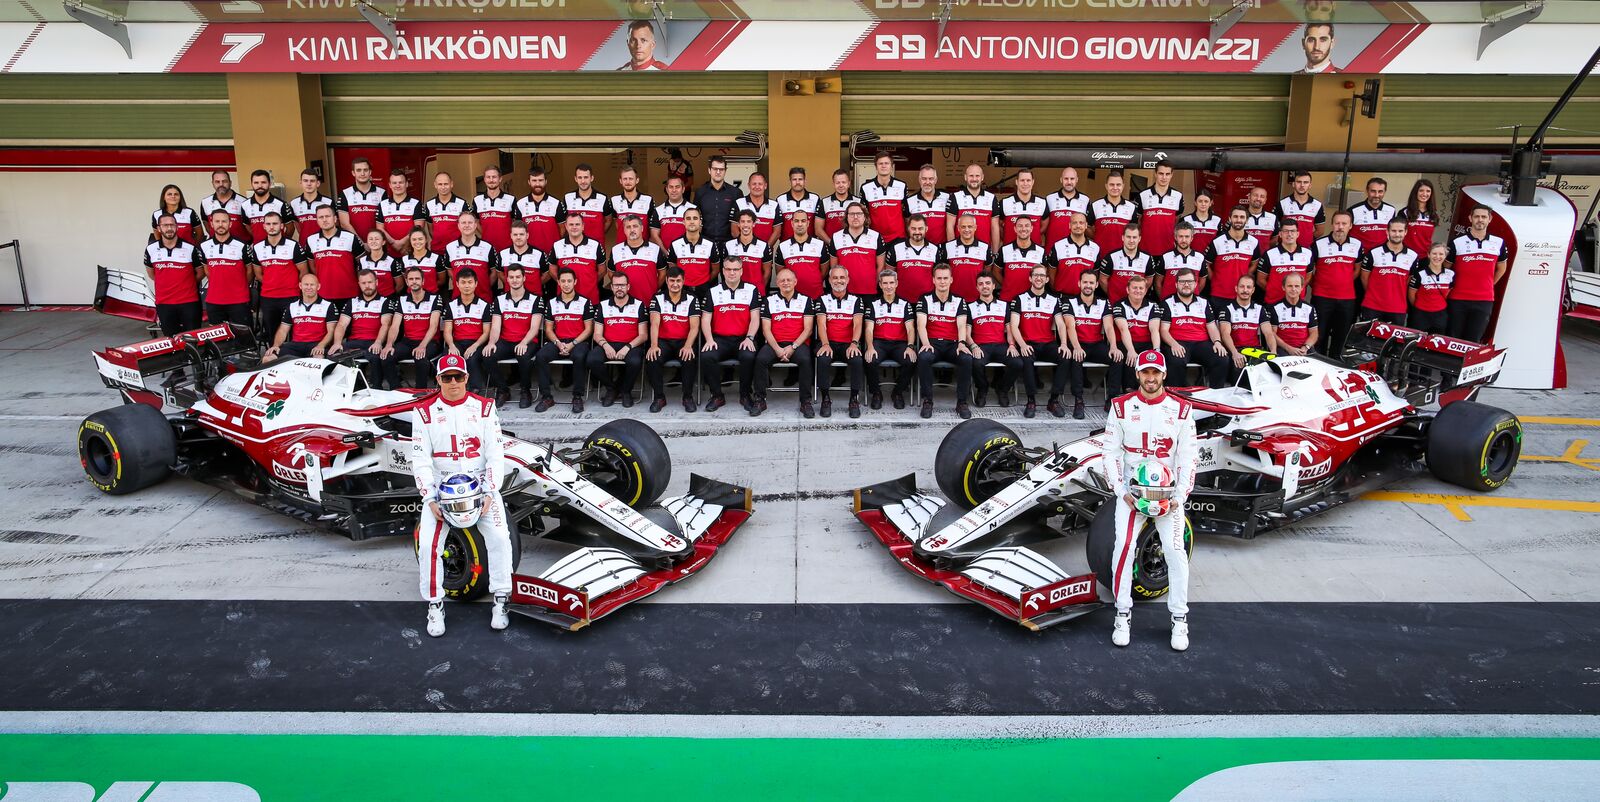 2021 Abu Dhabi Grand Prix Sunday - Alfa Romeo Racing team photo